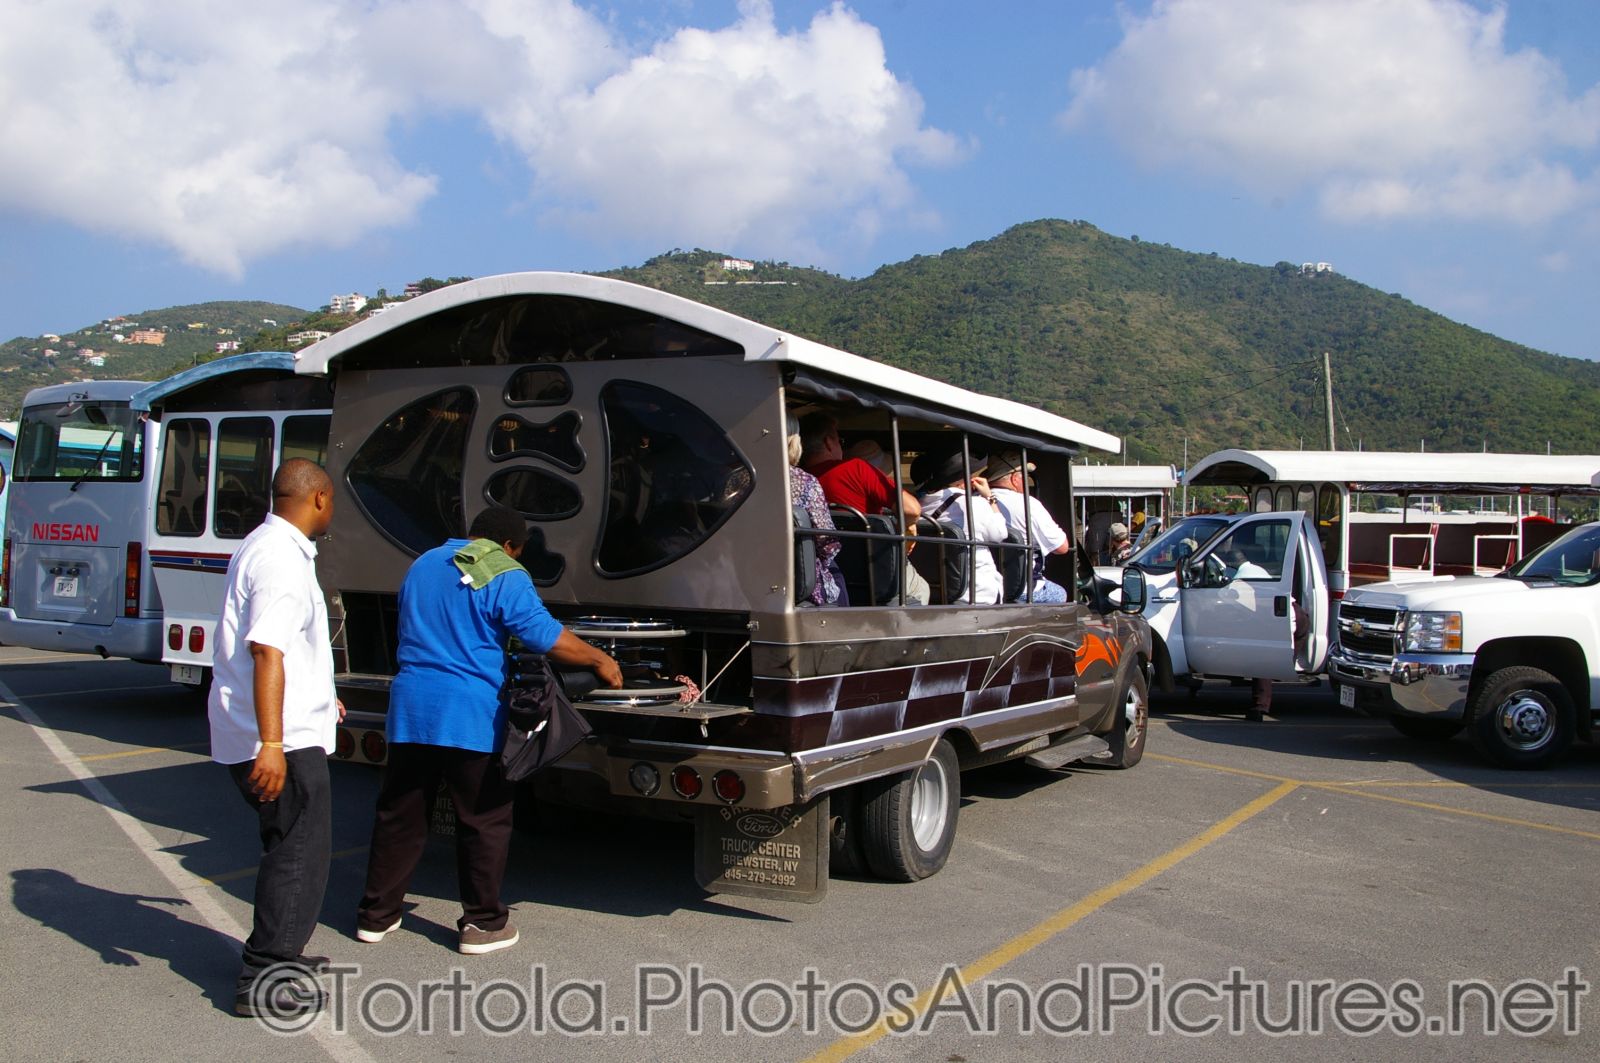 Excursion transport at Tortola Cruise Port.jpg
